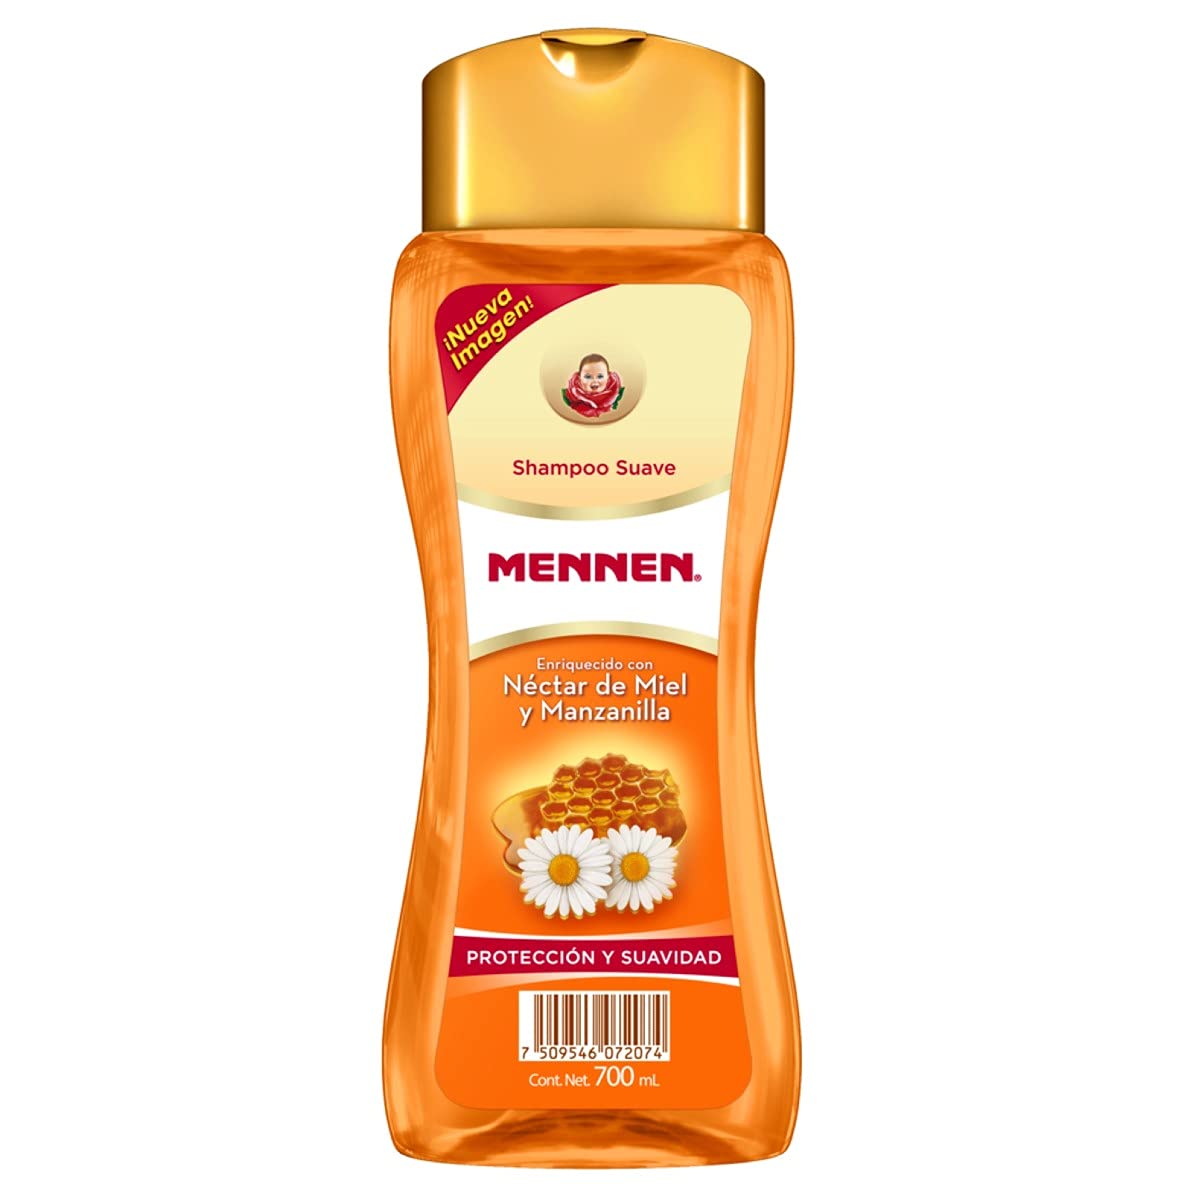 Mennen Shampoo for baby with Honey Nectar and chamomileShampoo Suave para bebe con miel y extracto de manzanilla